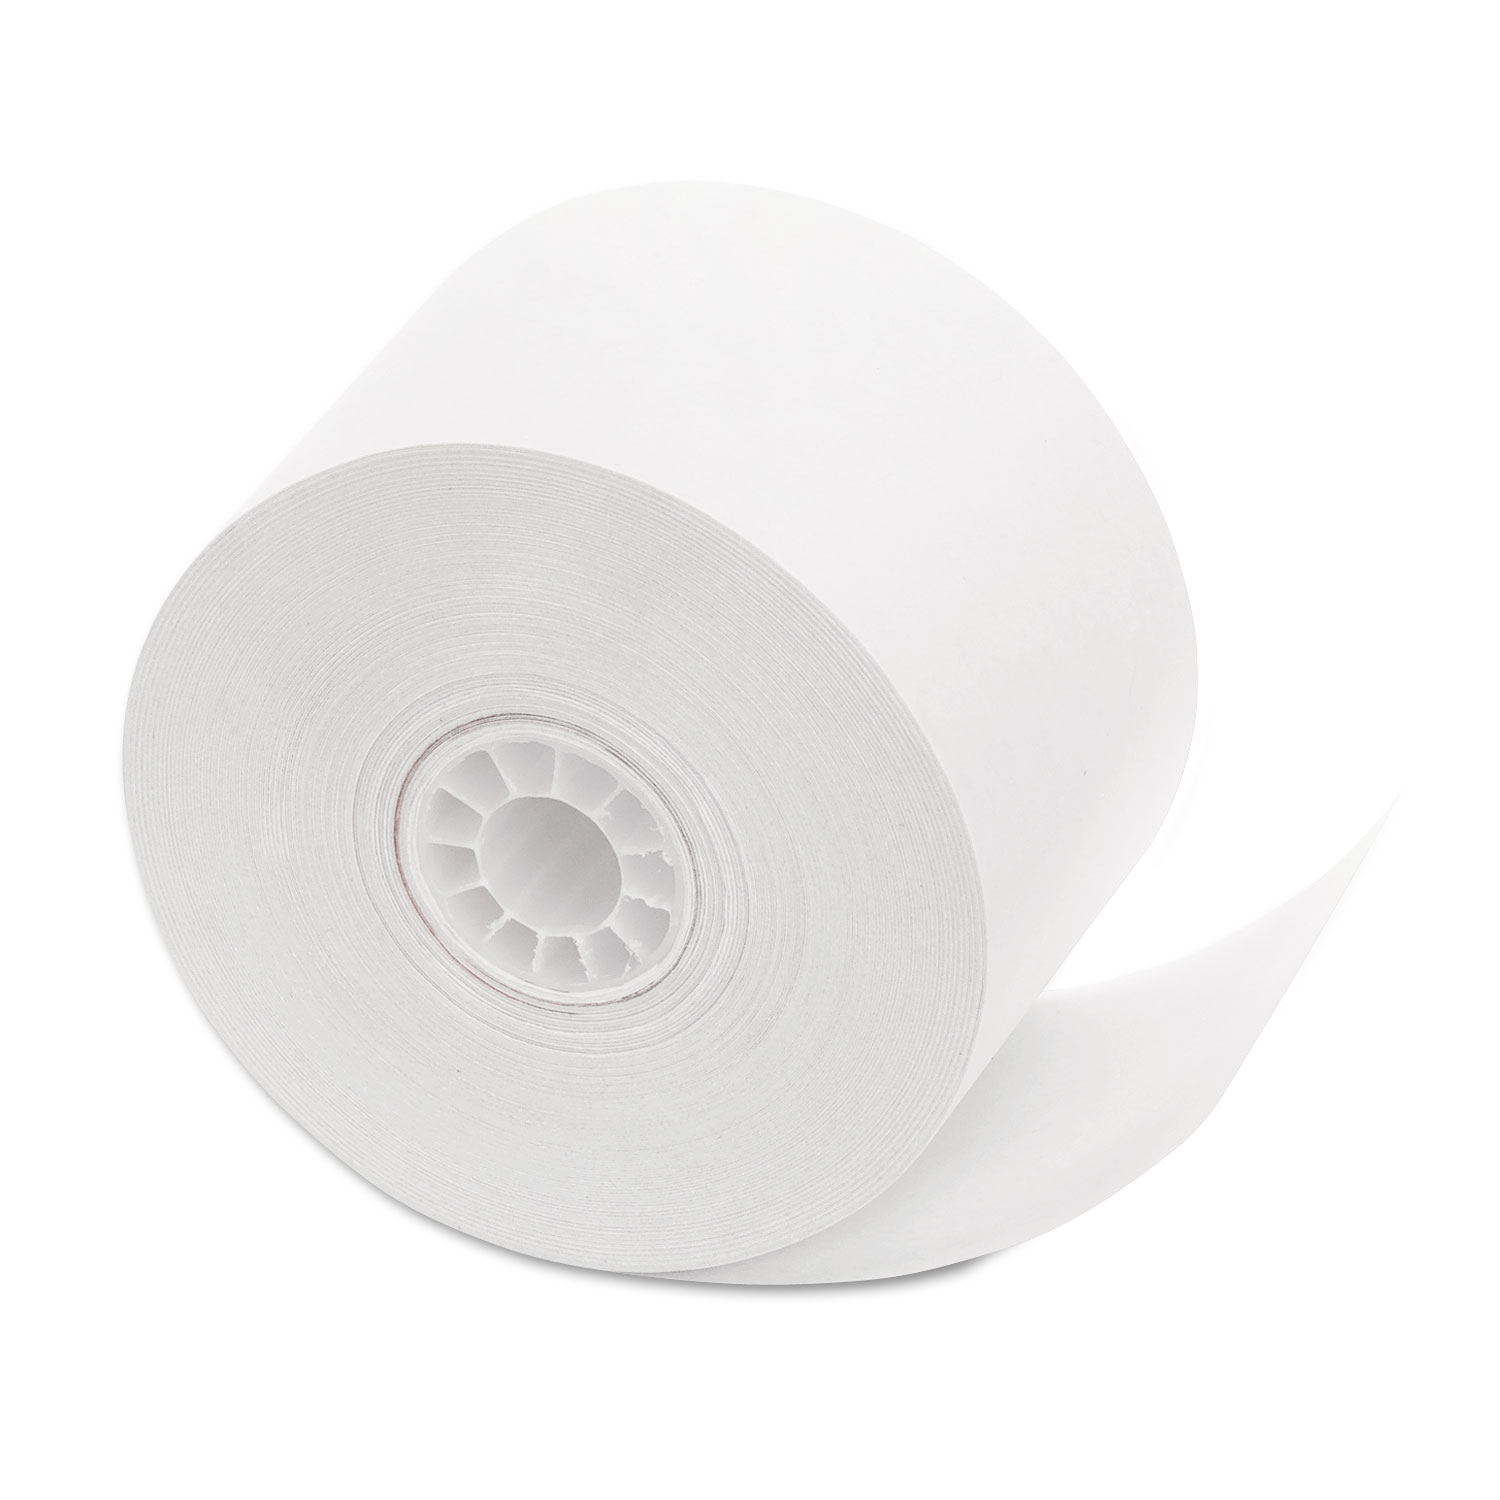  Iconex 18990 Impact Bond Paper Rolls, 1.75 x 150 ft, White, 10/Pack (PMC18990) 